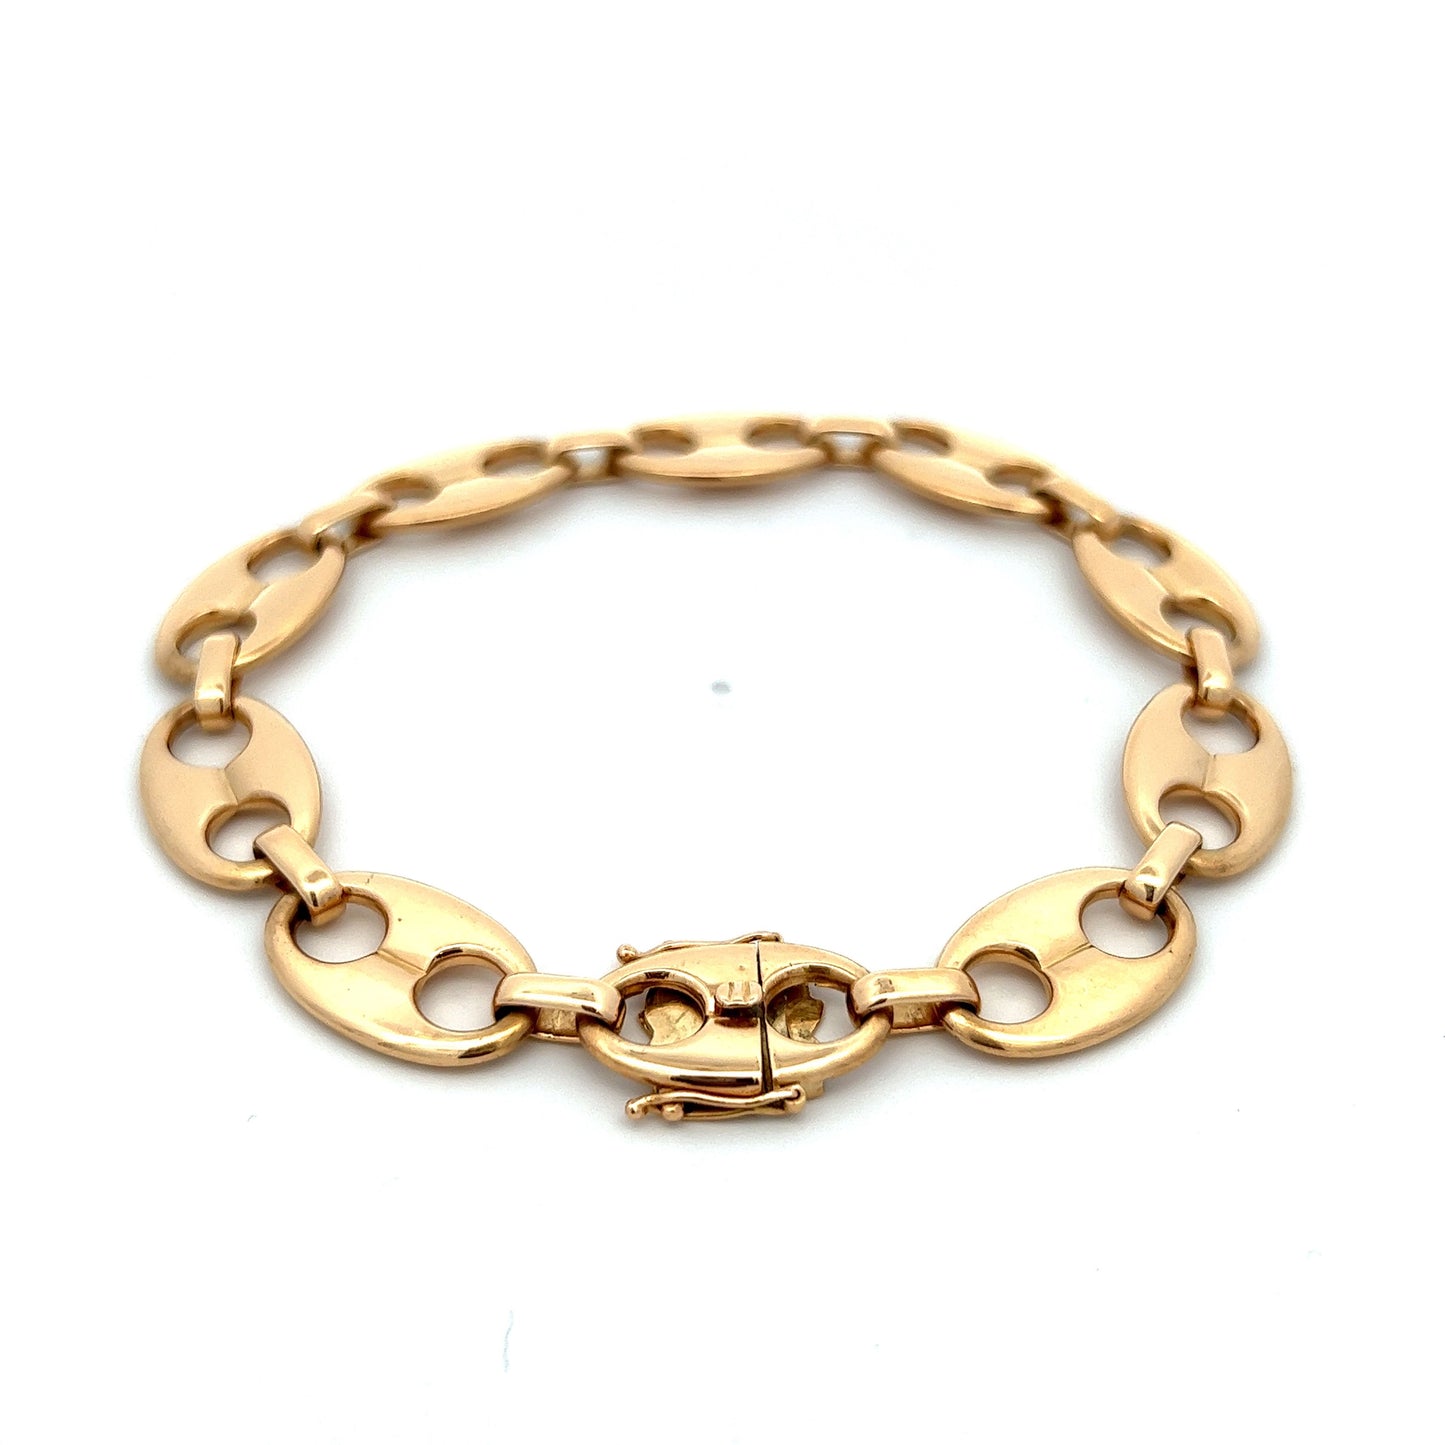 Wide Mariner Link Bracelet in 18k Yellow Gold